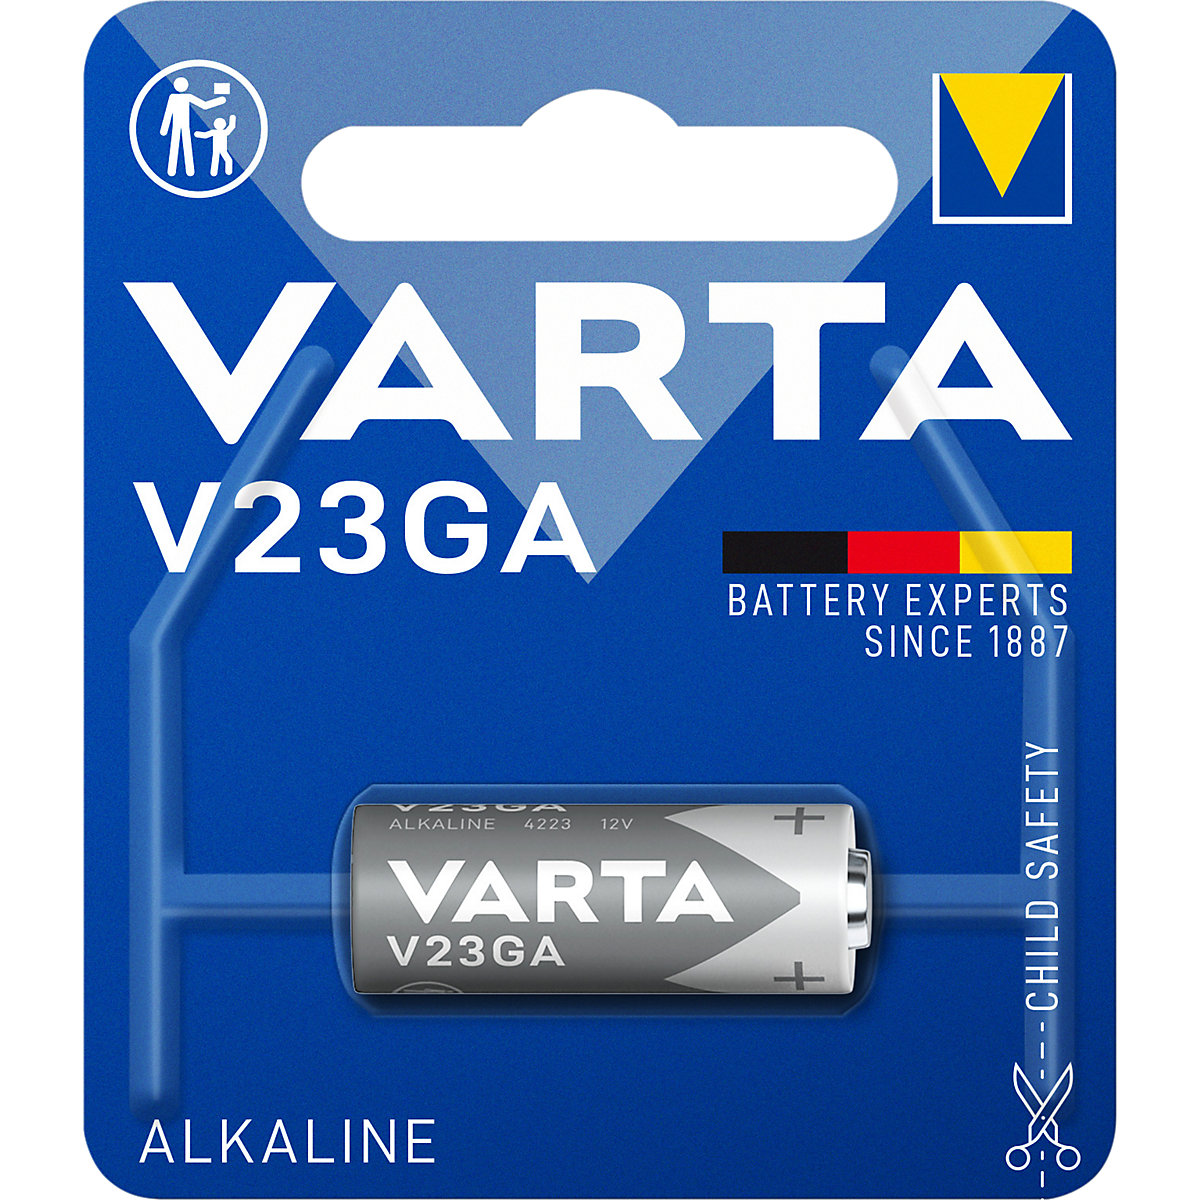 Bateria especial ALKALINE - VARTA